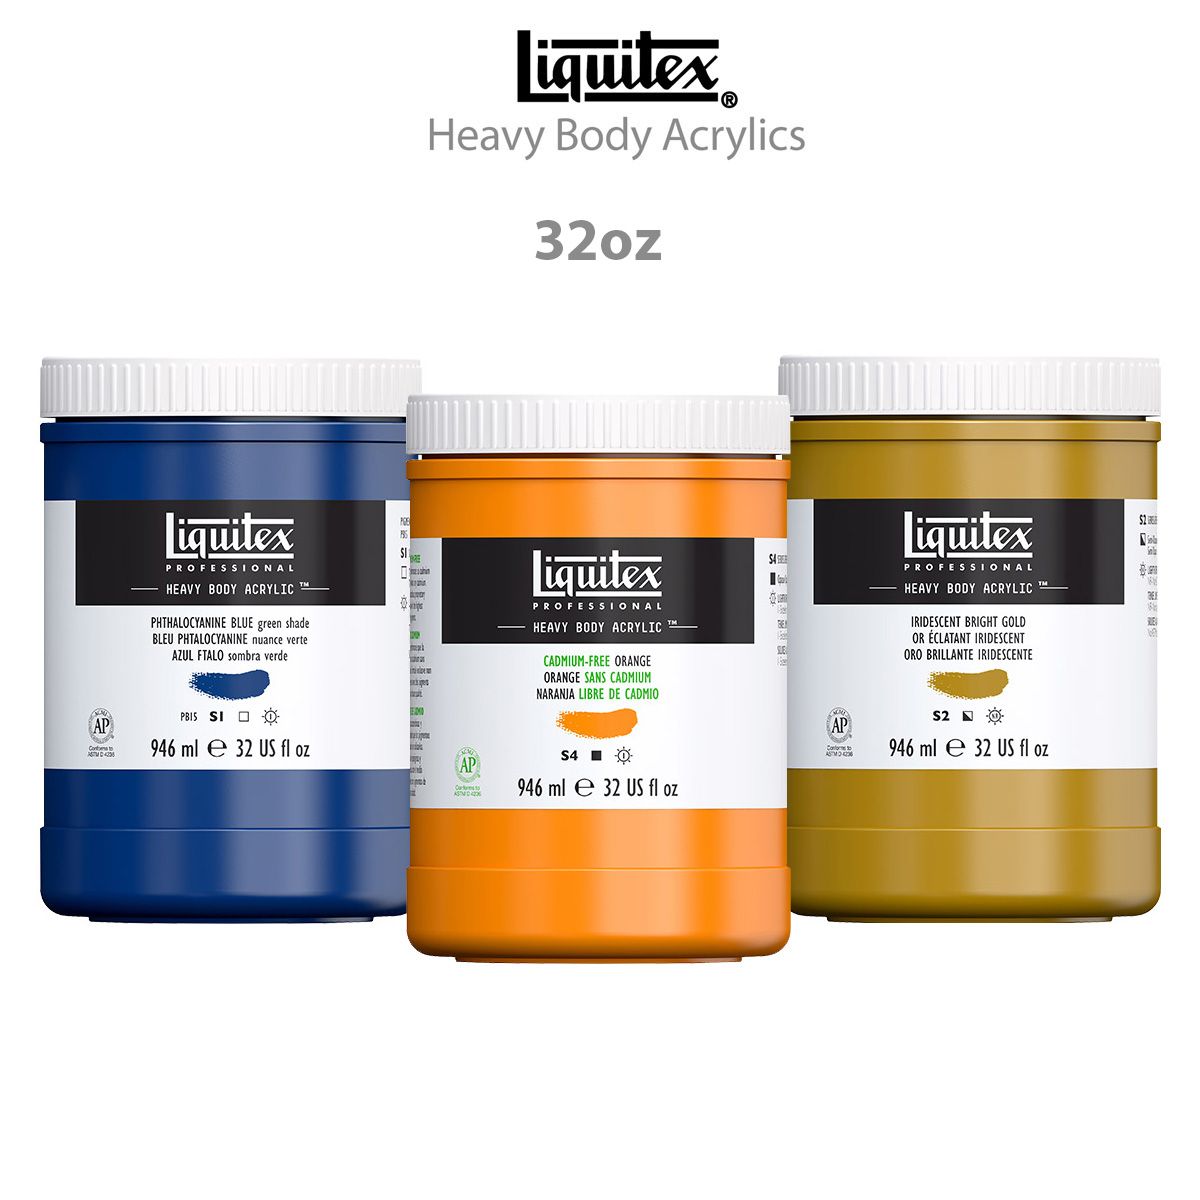 Liquitex Heavy Body Acrylic 32oz Jars